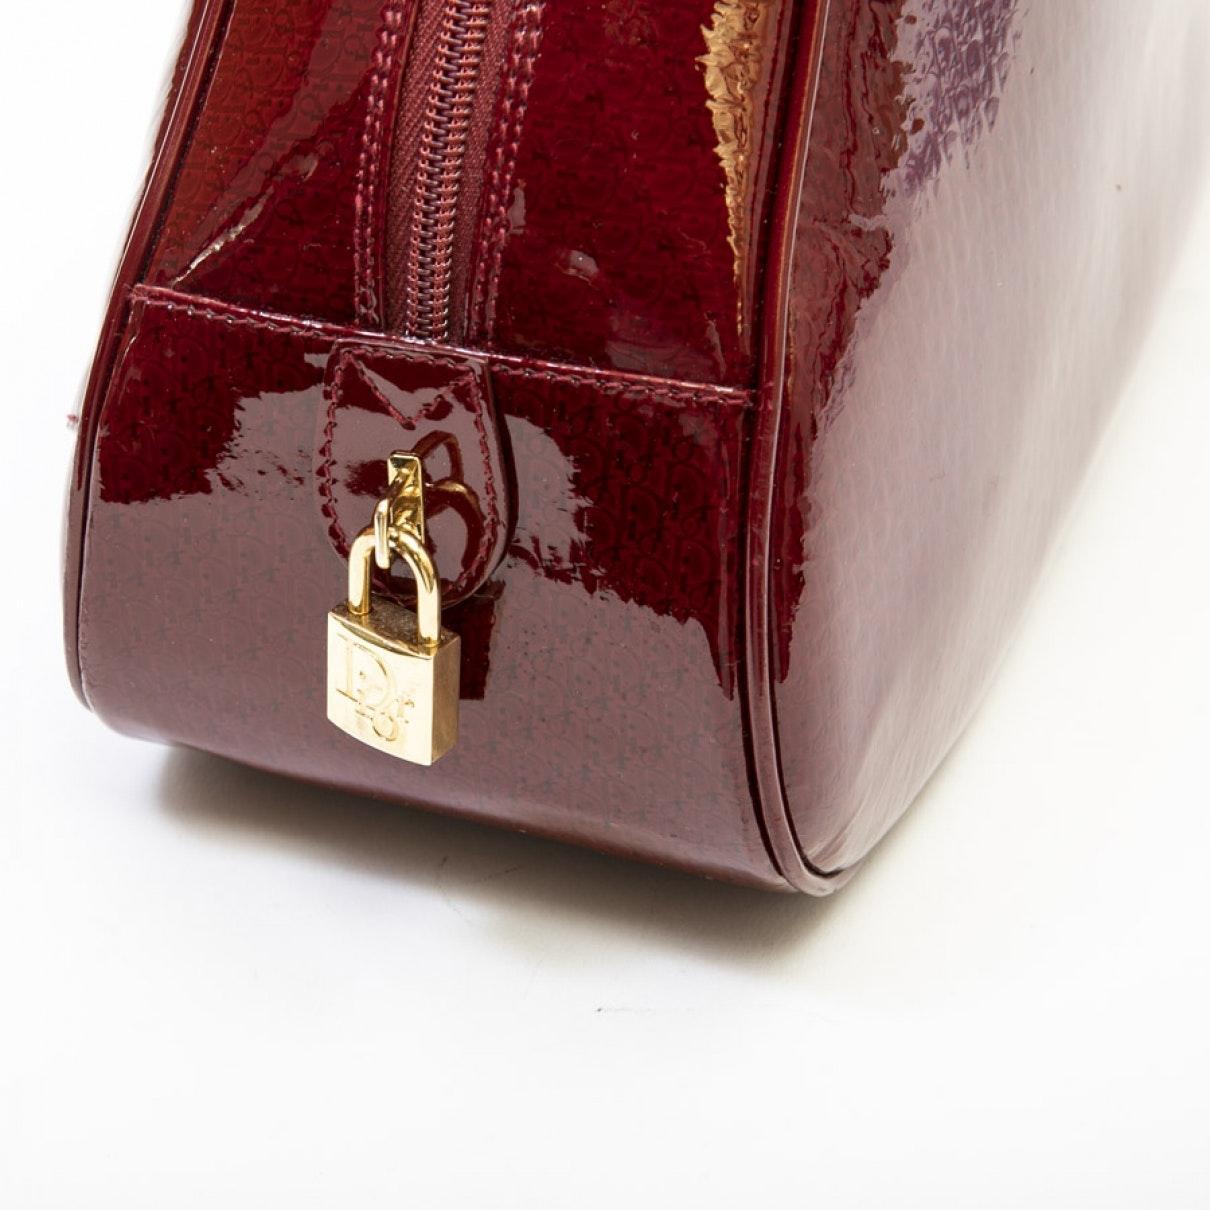 Dior Saddle Red Patent Leather Handbag - Lyst